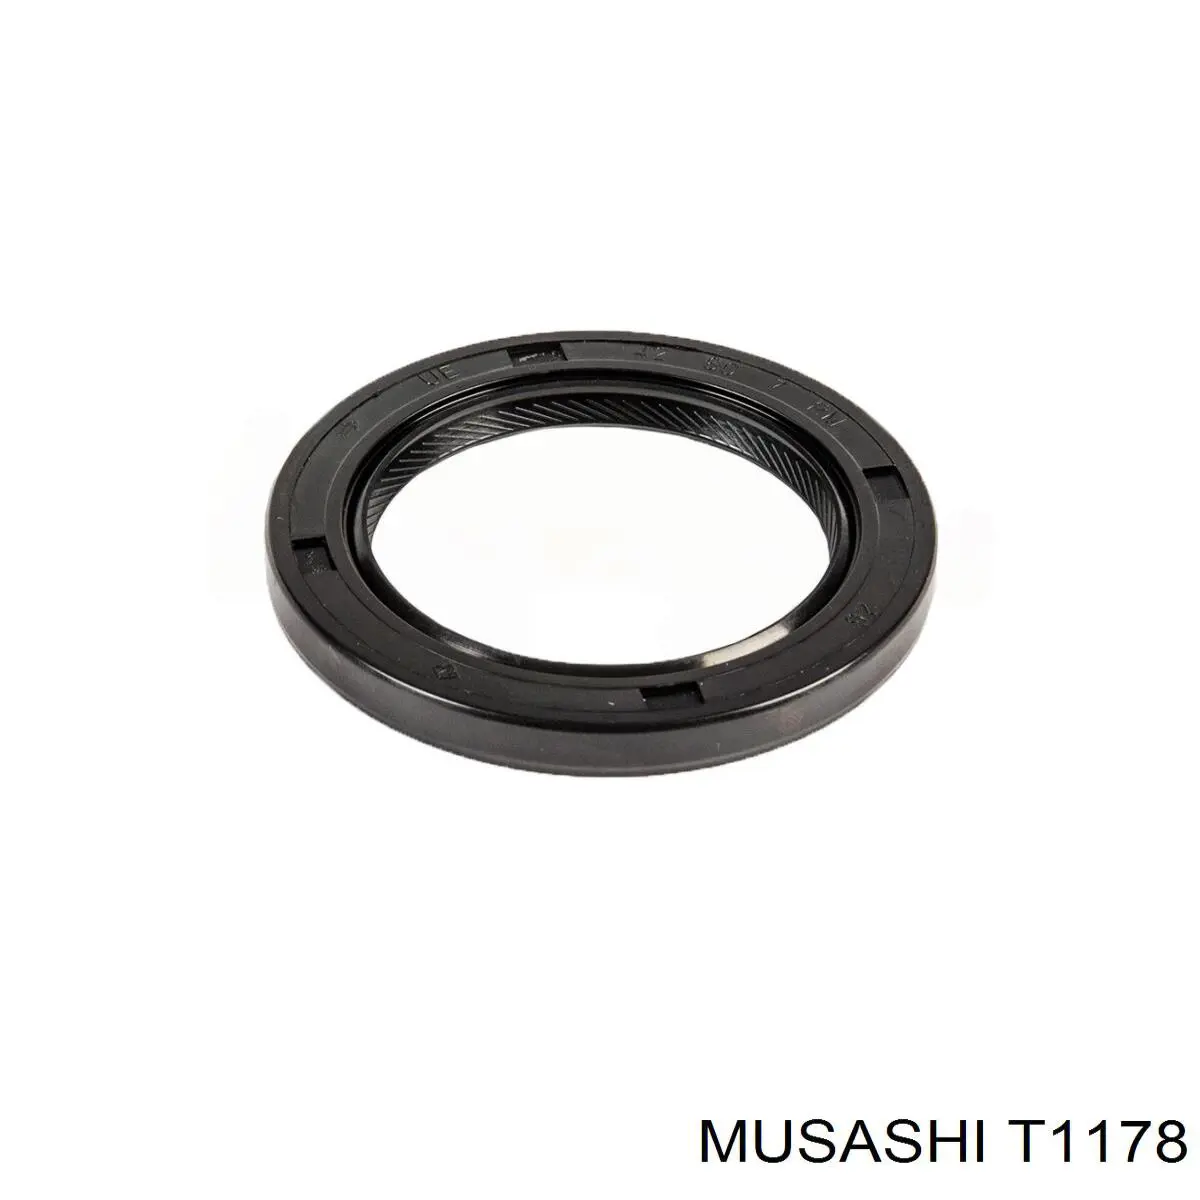 T1178 Musashi anillo retén, cigüeñal frontal